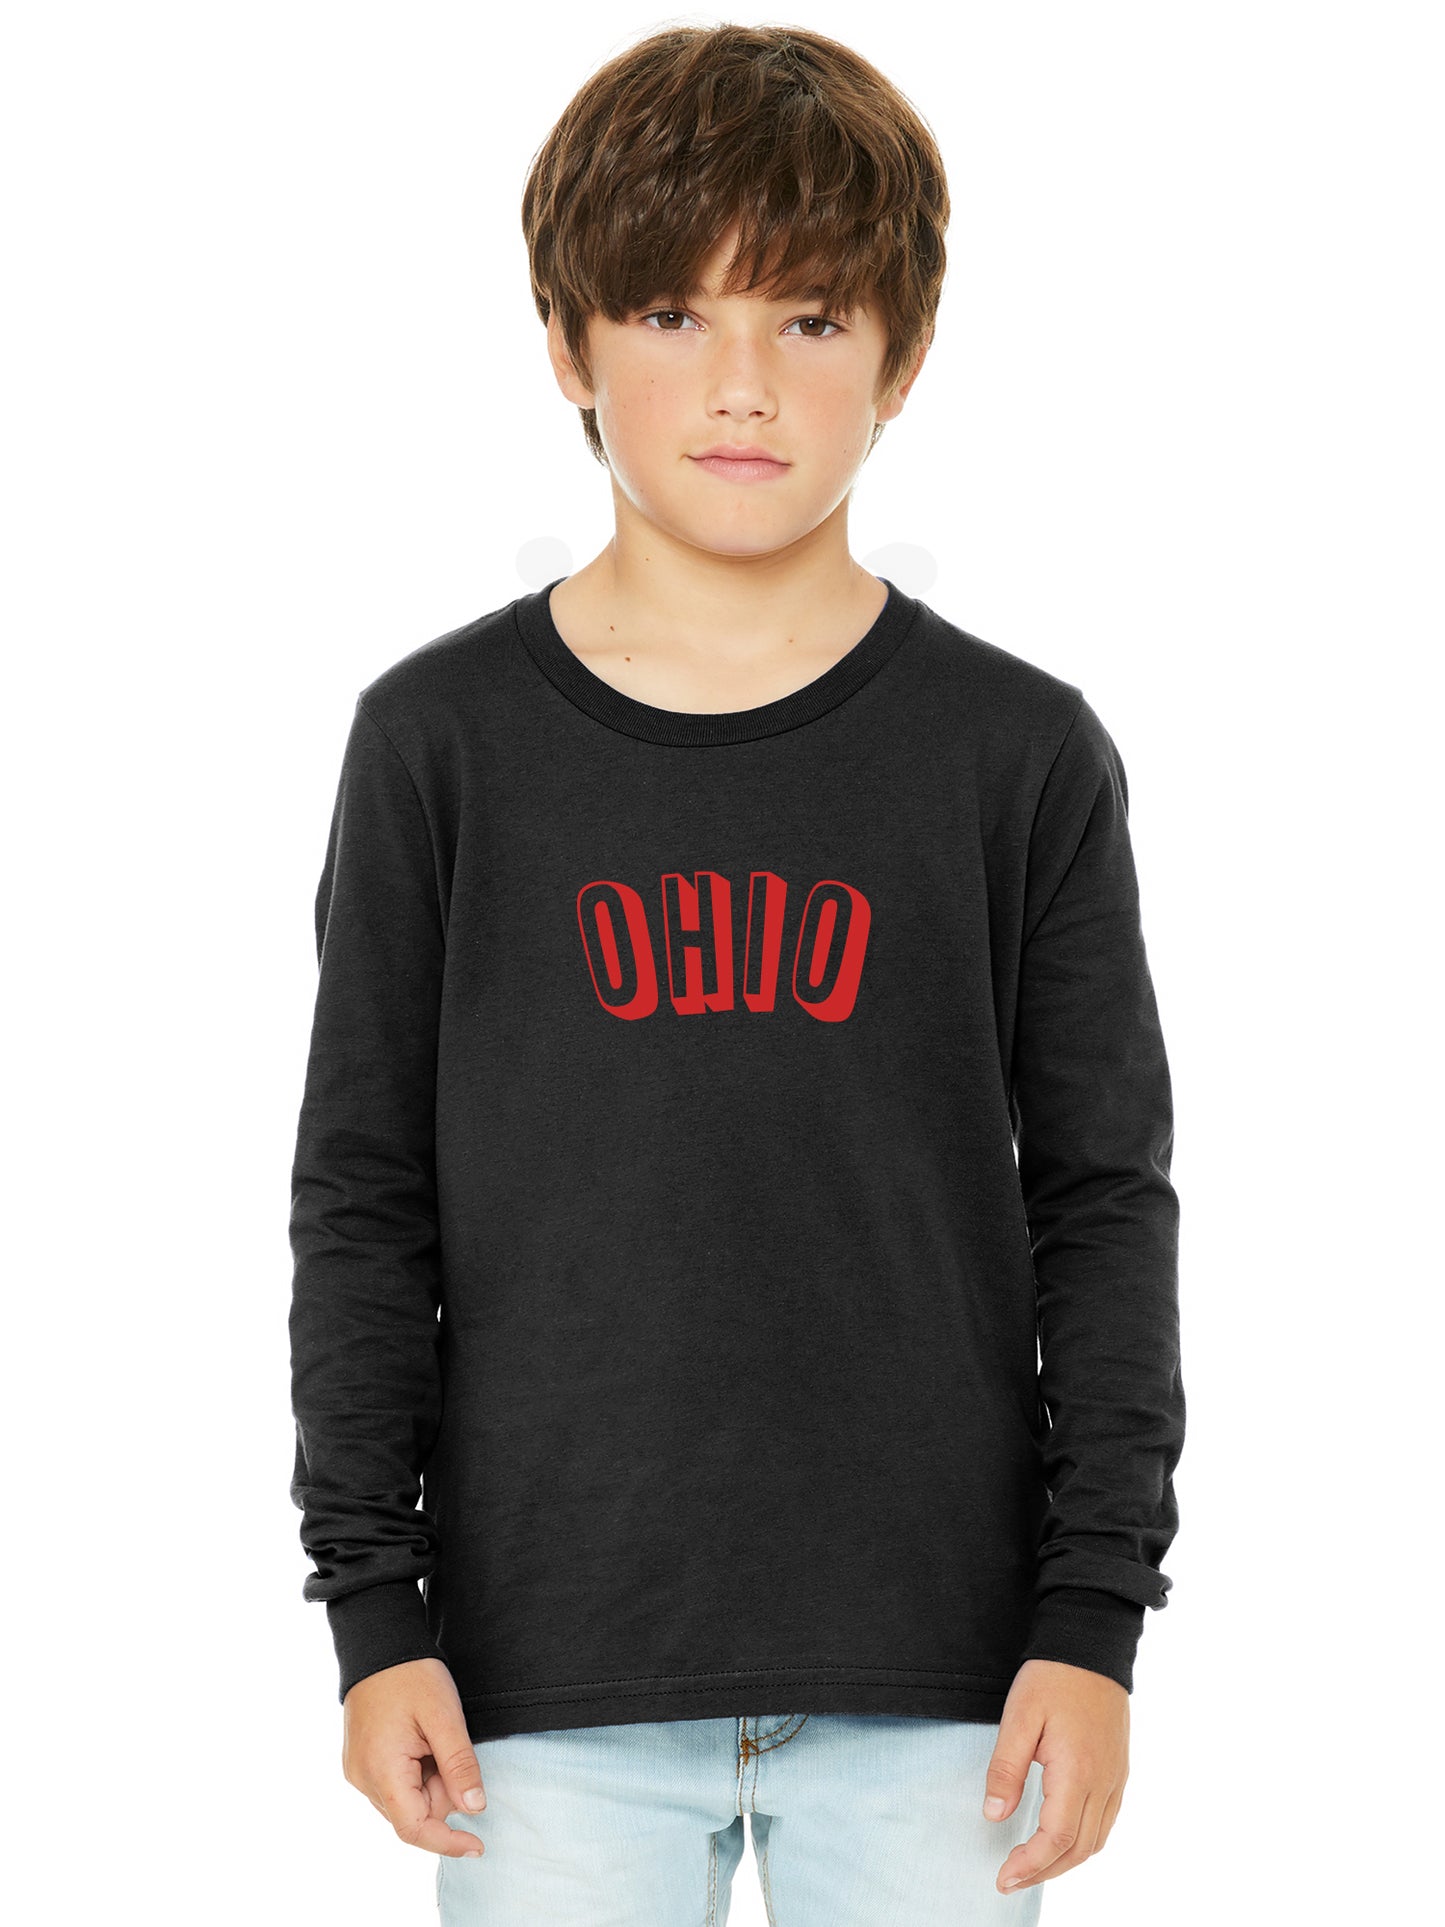 Daxton Youth Long Sleeve Ohio Basic Tshirt